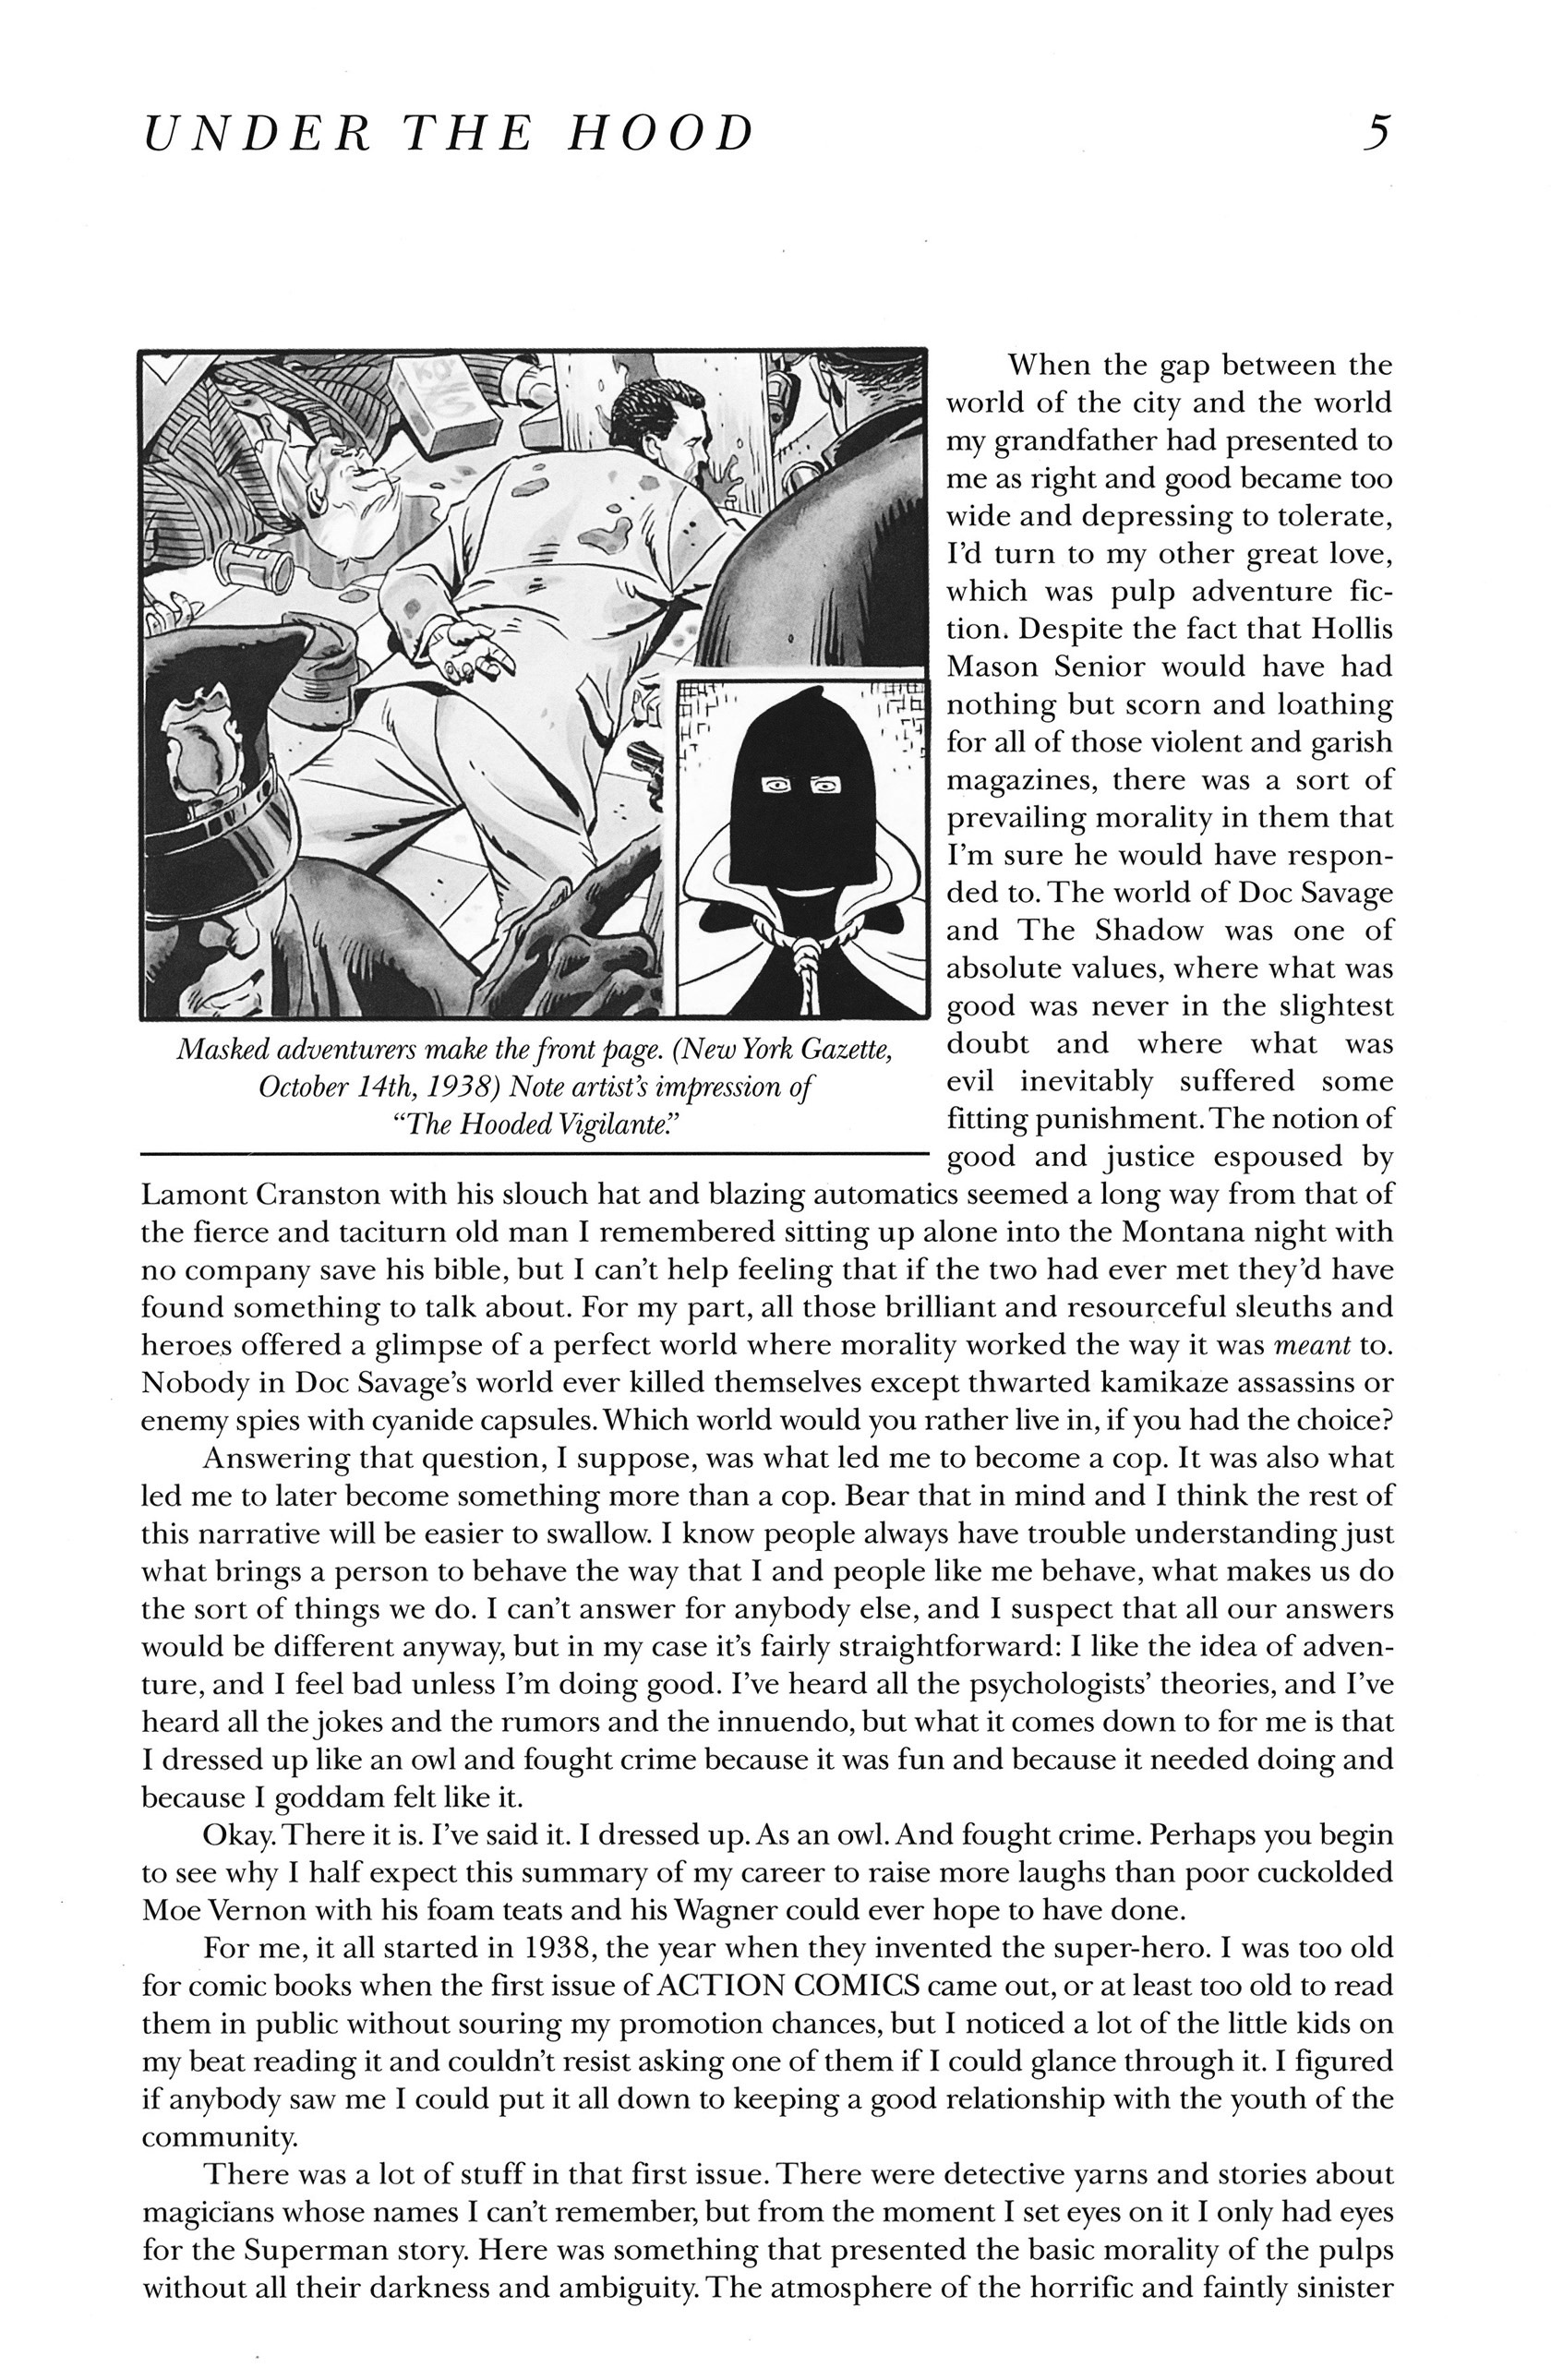 Read online Watchmen comic -  Issue #1 - 33